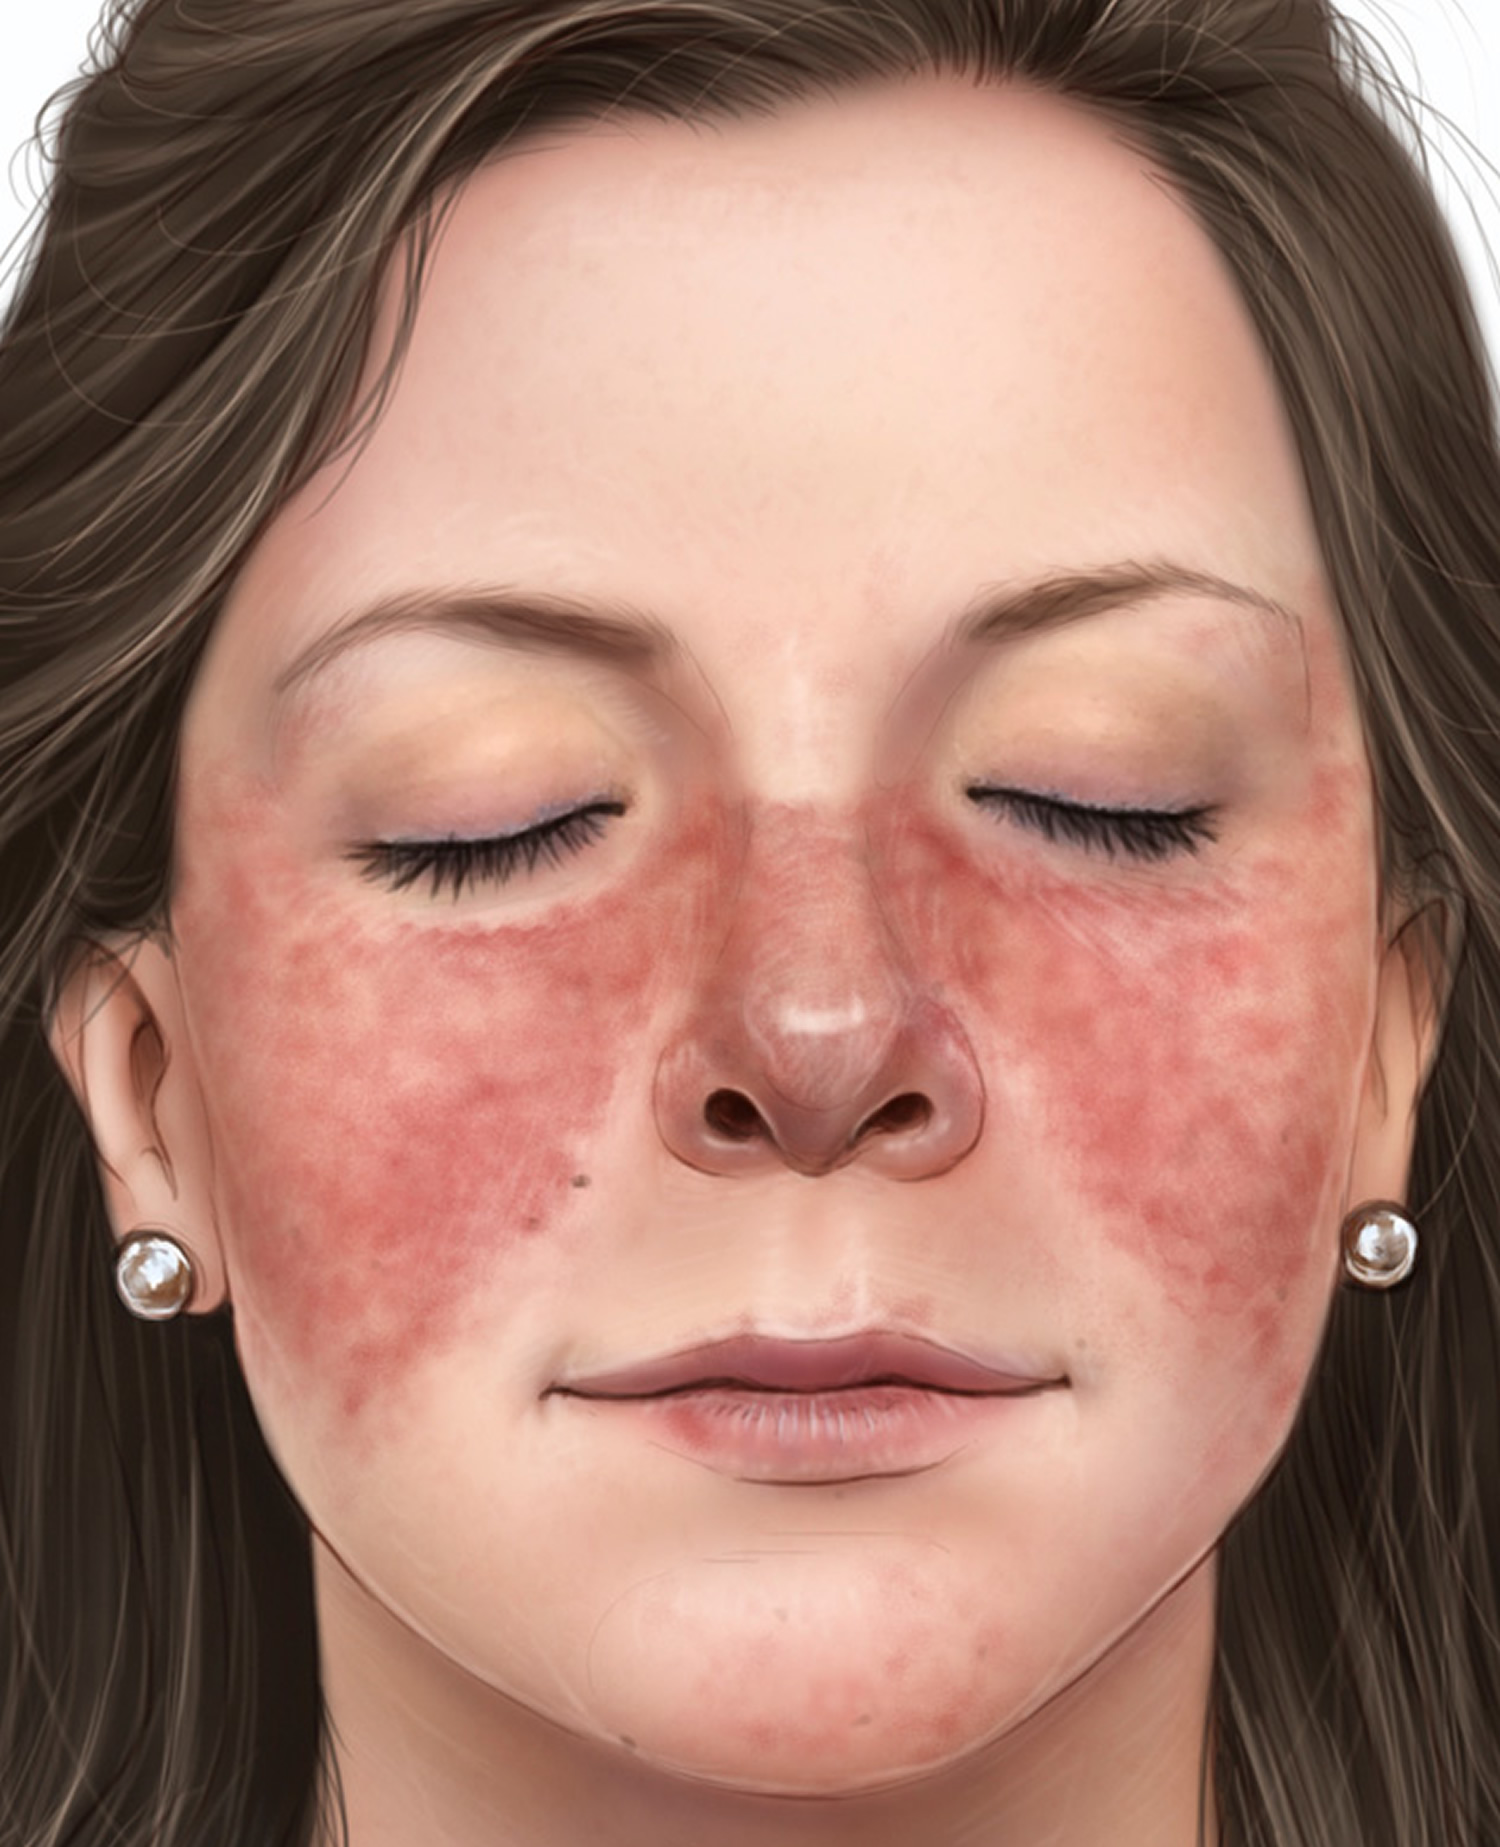 Lupus facial rash